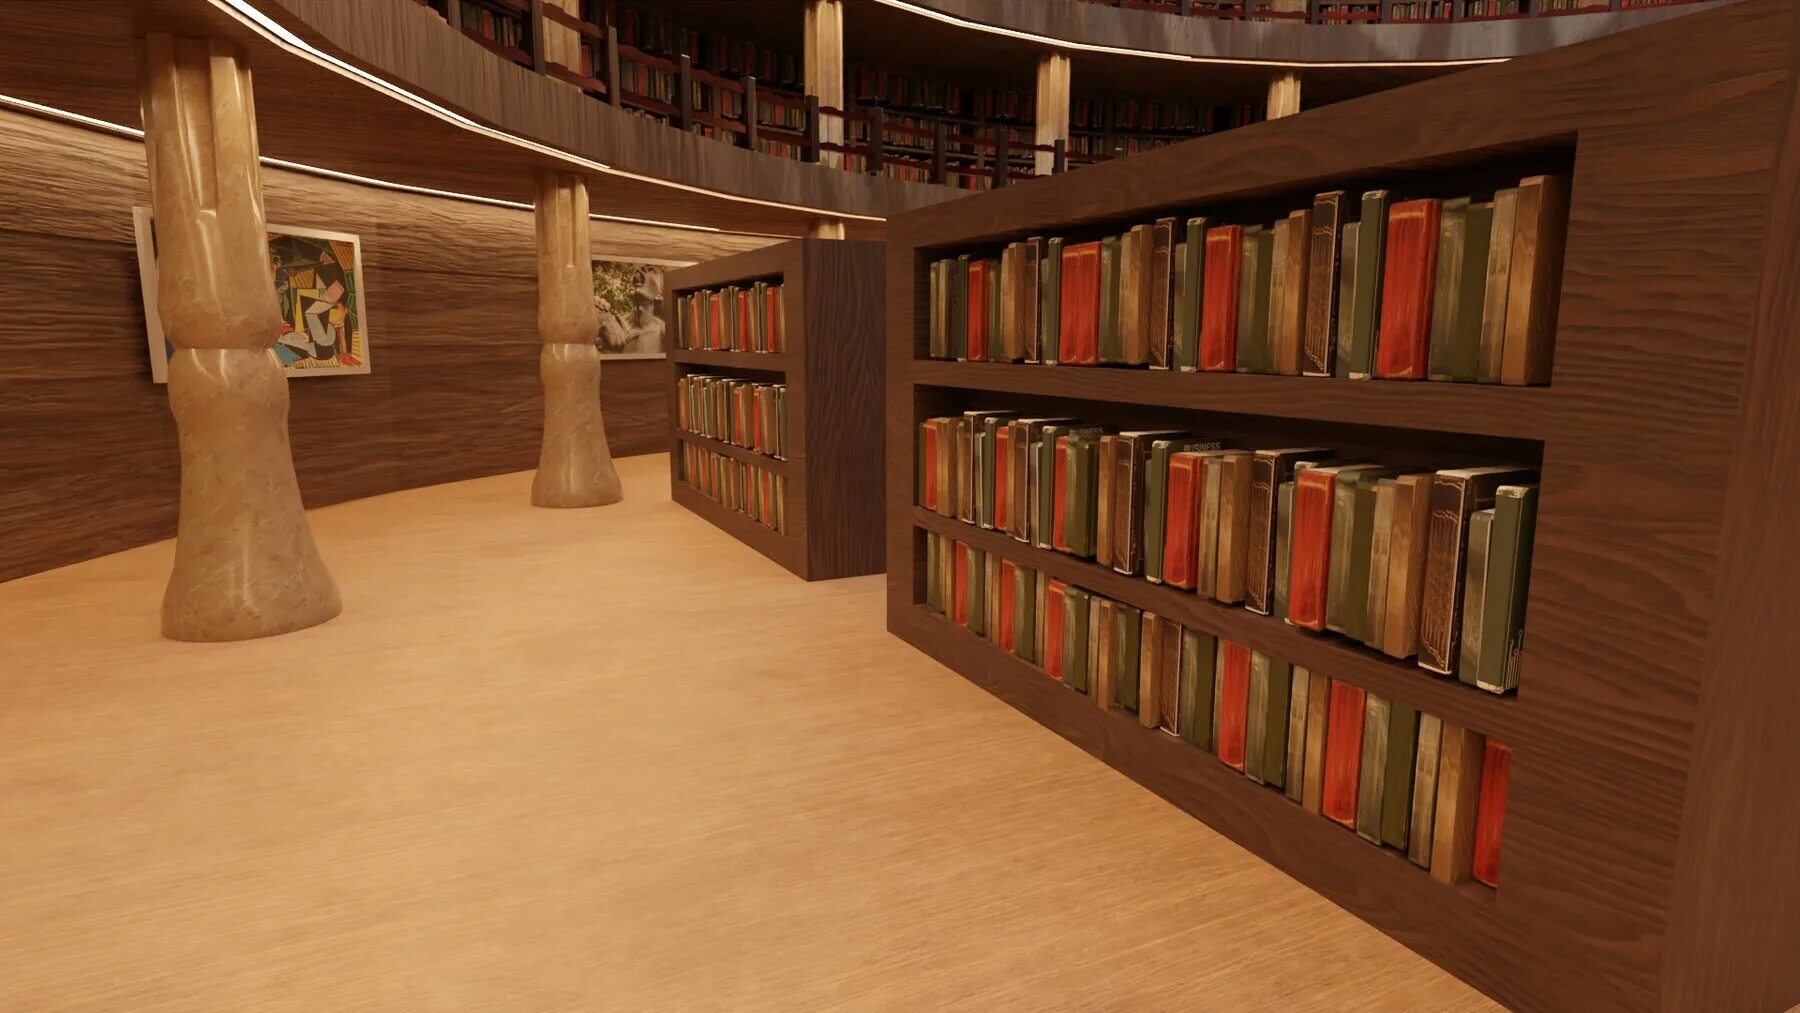 Библиотека 3д. Макет библиотеки. Библиотека 3д моделей. Библиотека 3d моделей. 3d library